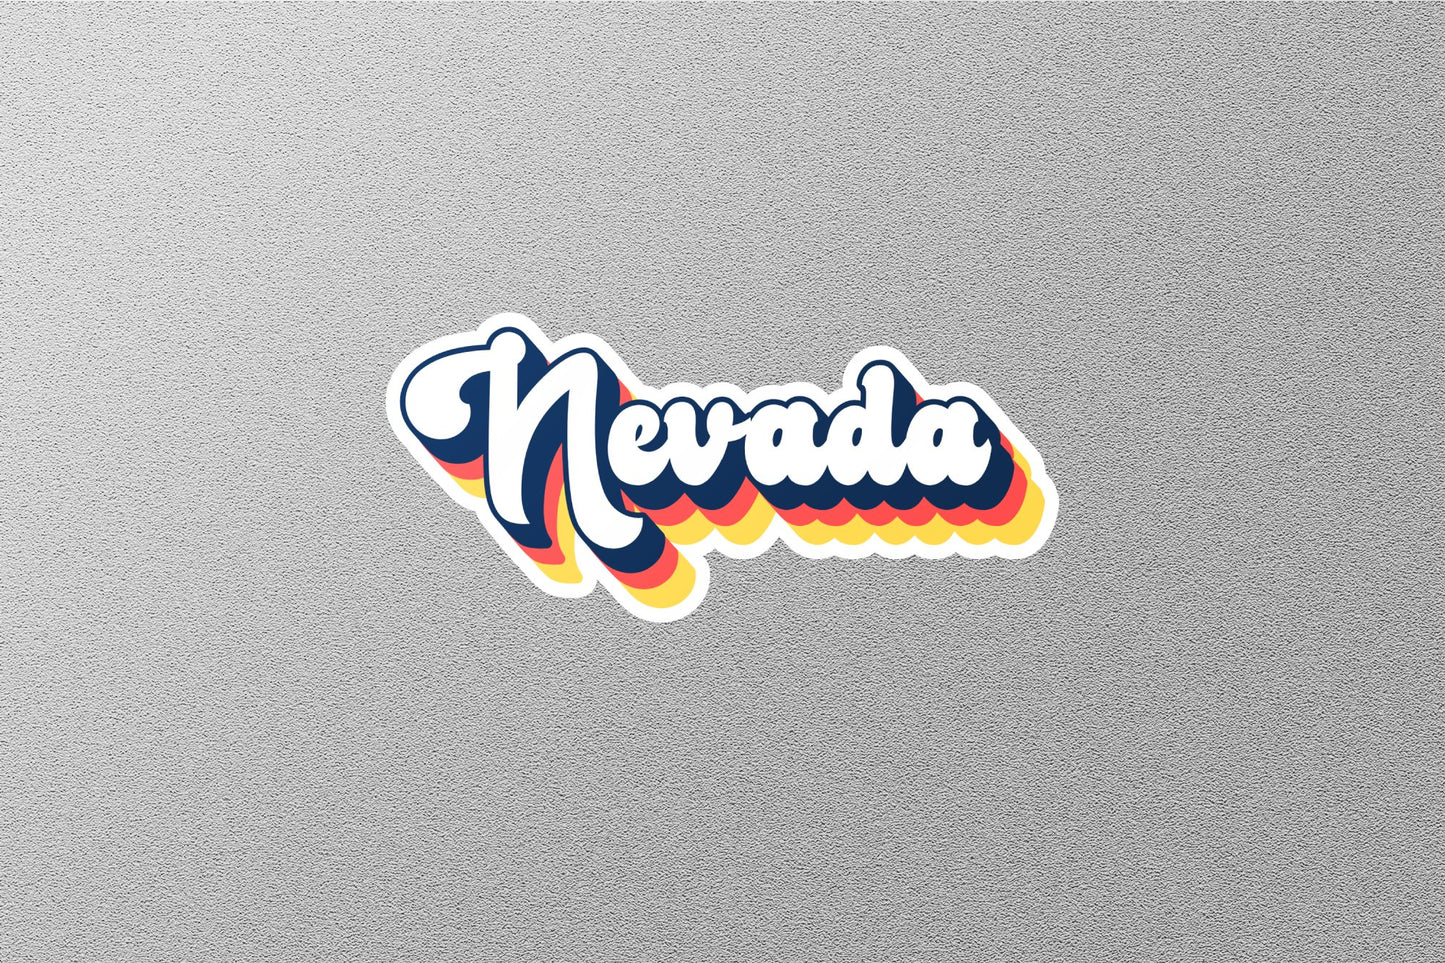 Retro Nevada State Sticker